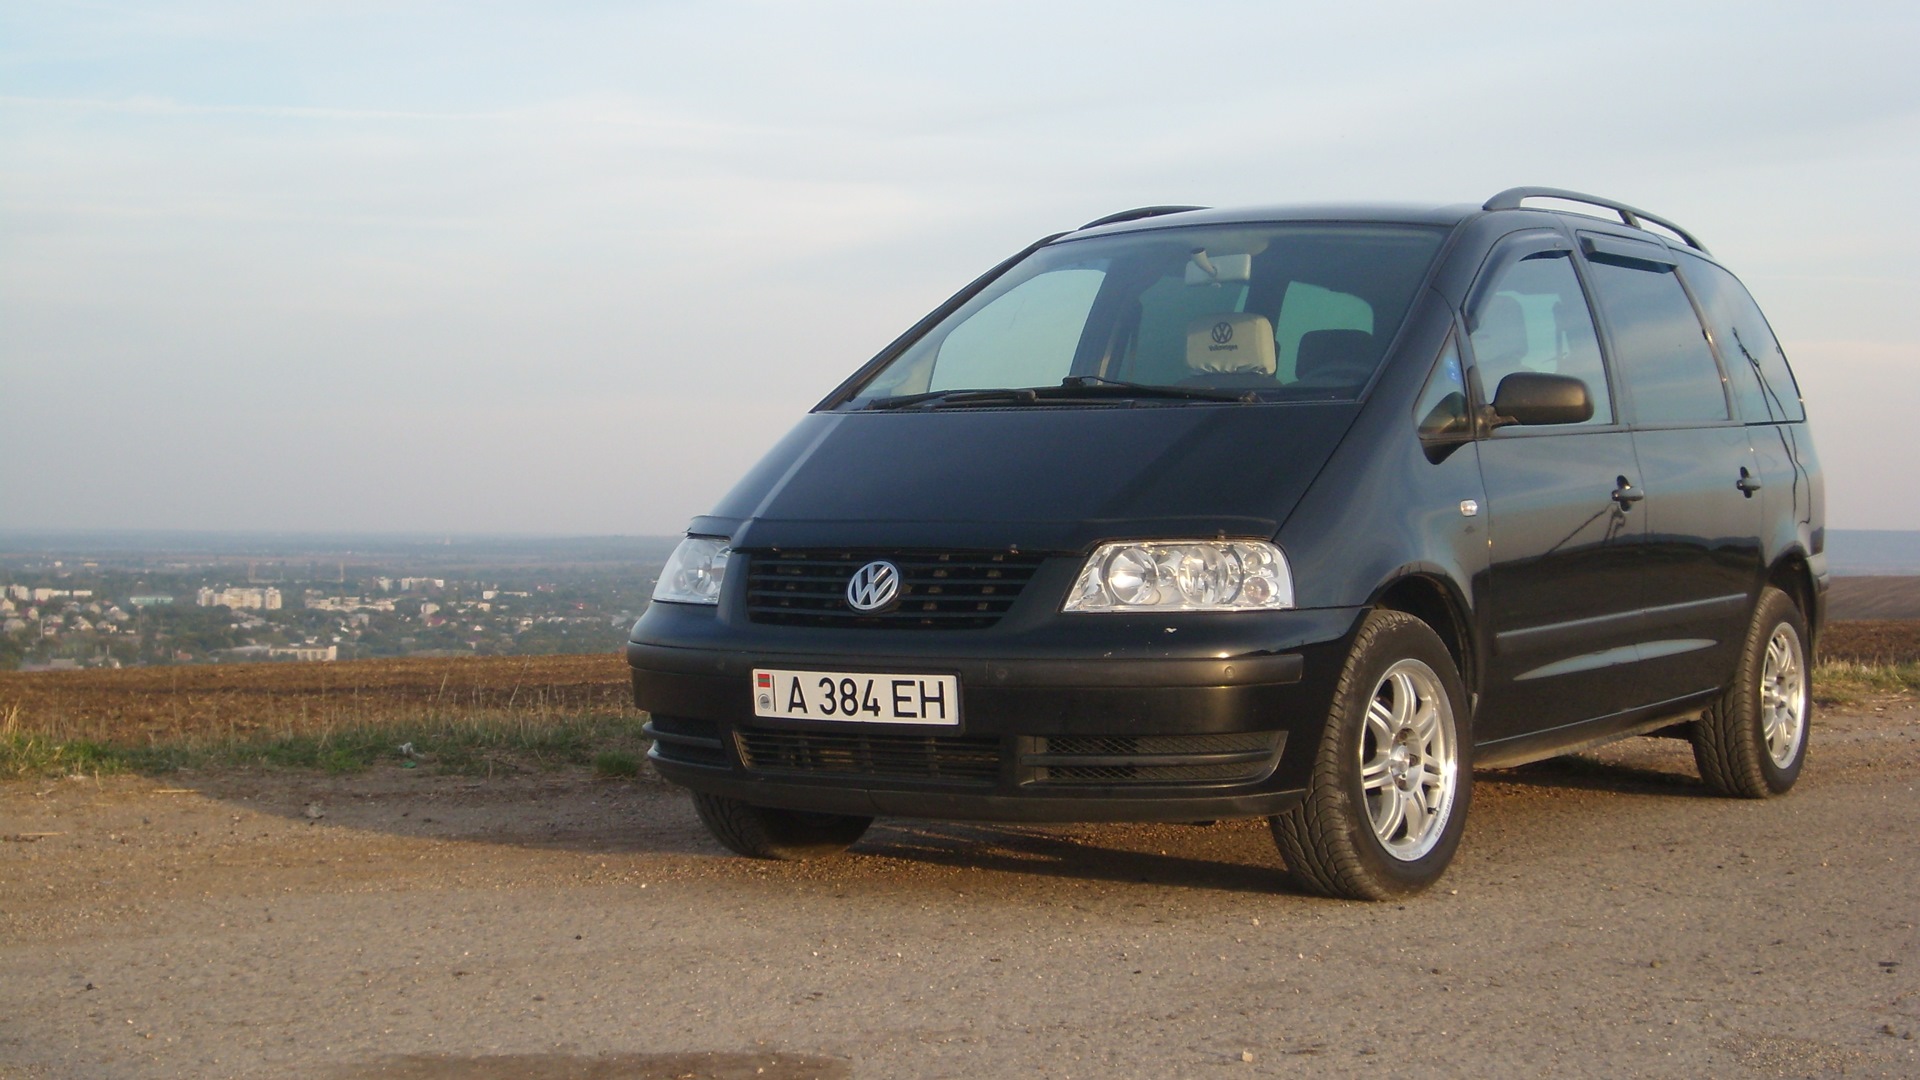 Фольксваген шаран 2001 год. VW Sharan 1.9 TDI 1999. VW Sharan 1.9 TDI 1997 Tuning. Фольксваген Шаран 2005 1.9 тди. VW Sharan 1.9 TDI 1998 С черными дисками.